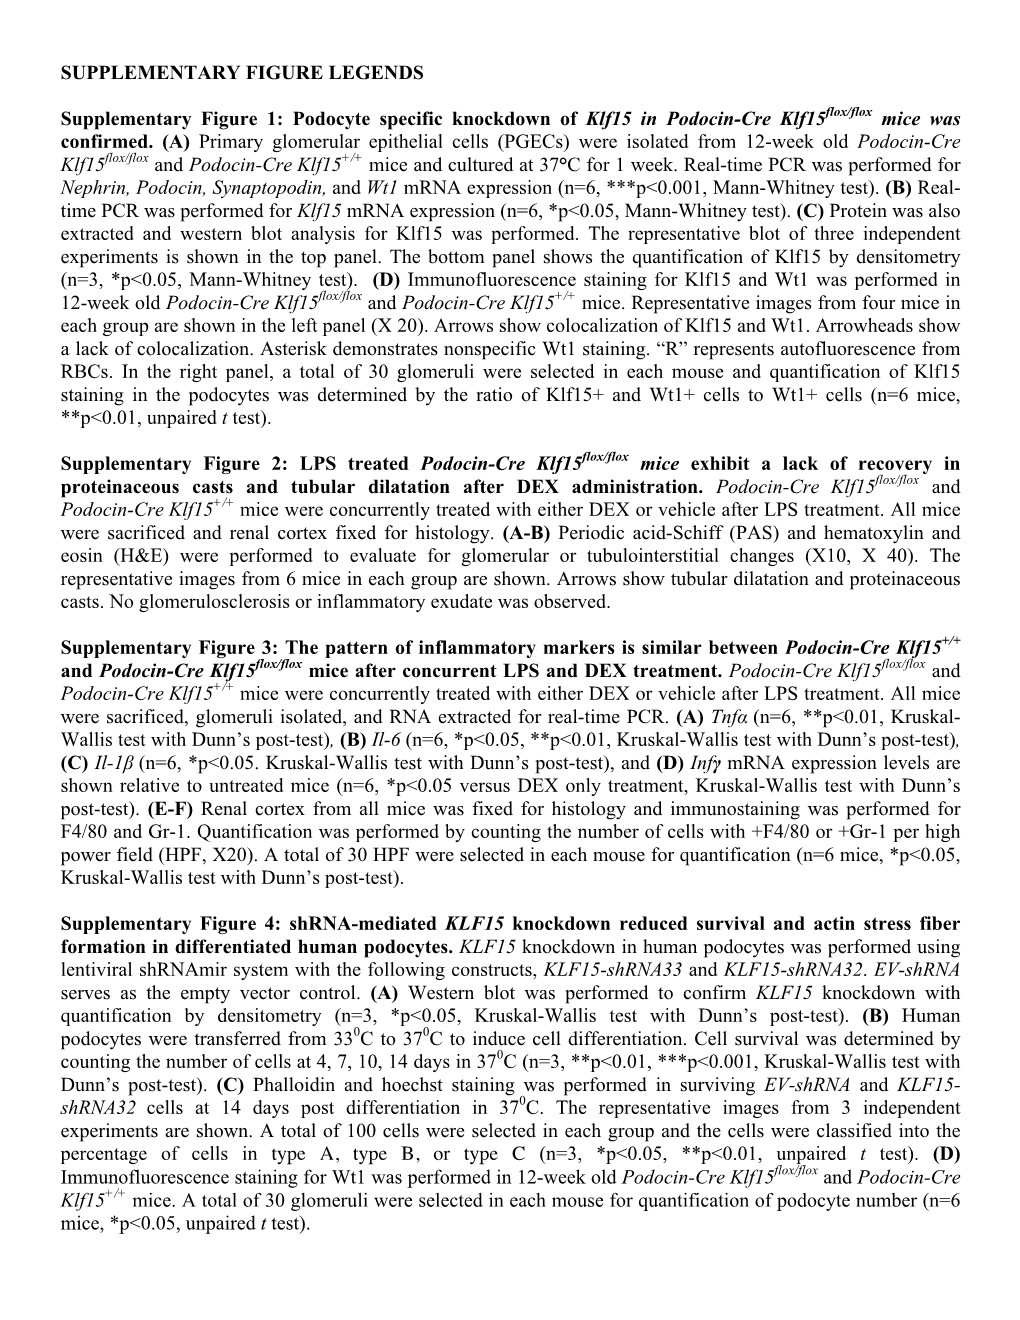 Podocyte Specific Knockdown of Klf15 in Podocin-Cre Klf15flox/Flox Mice Was Confirmed